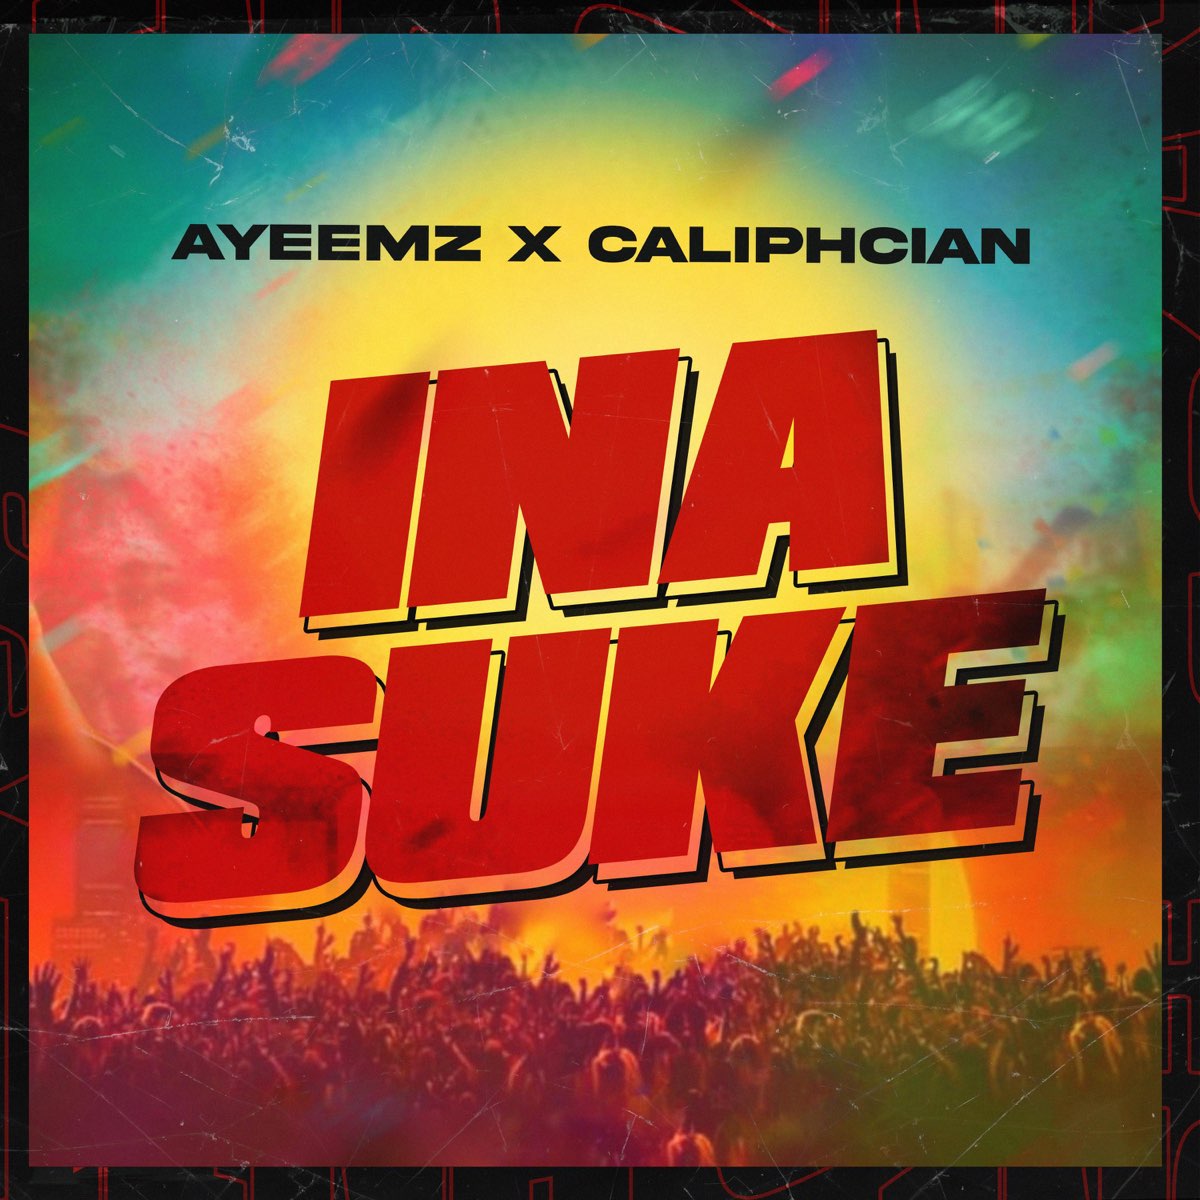 Ina Suke (feat. Caliphcian) - Single by AyeeMz on Apple Music